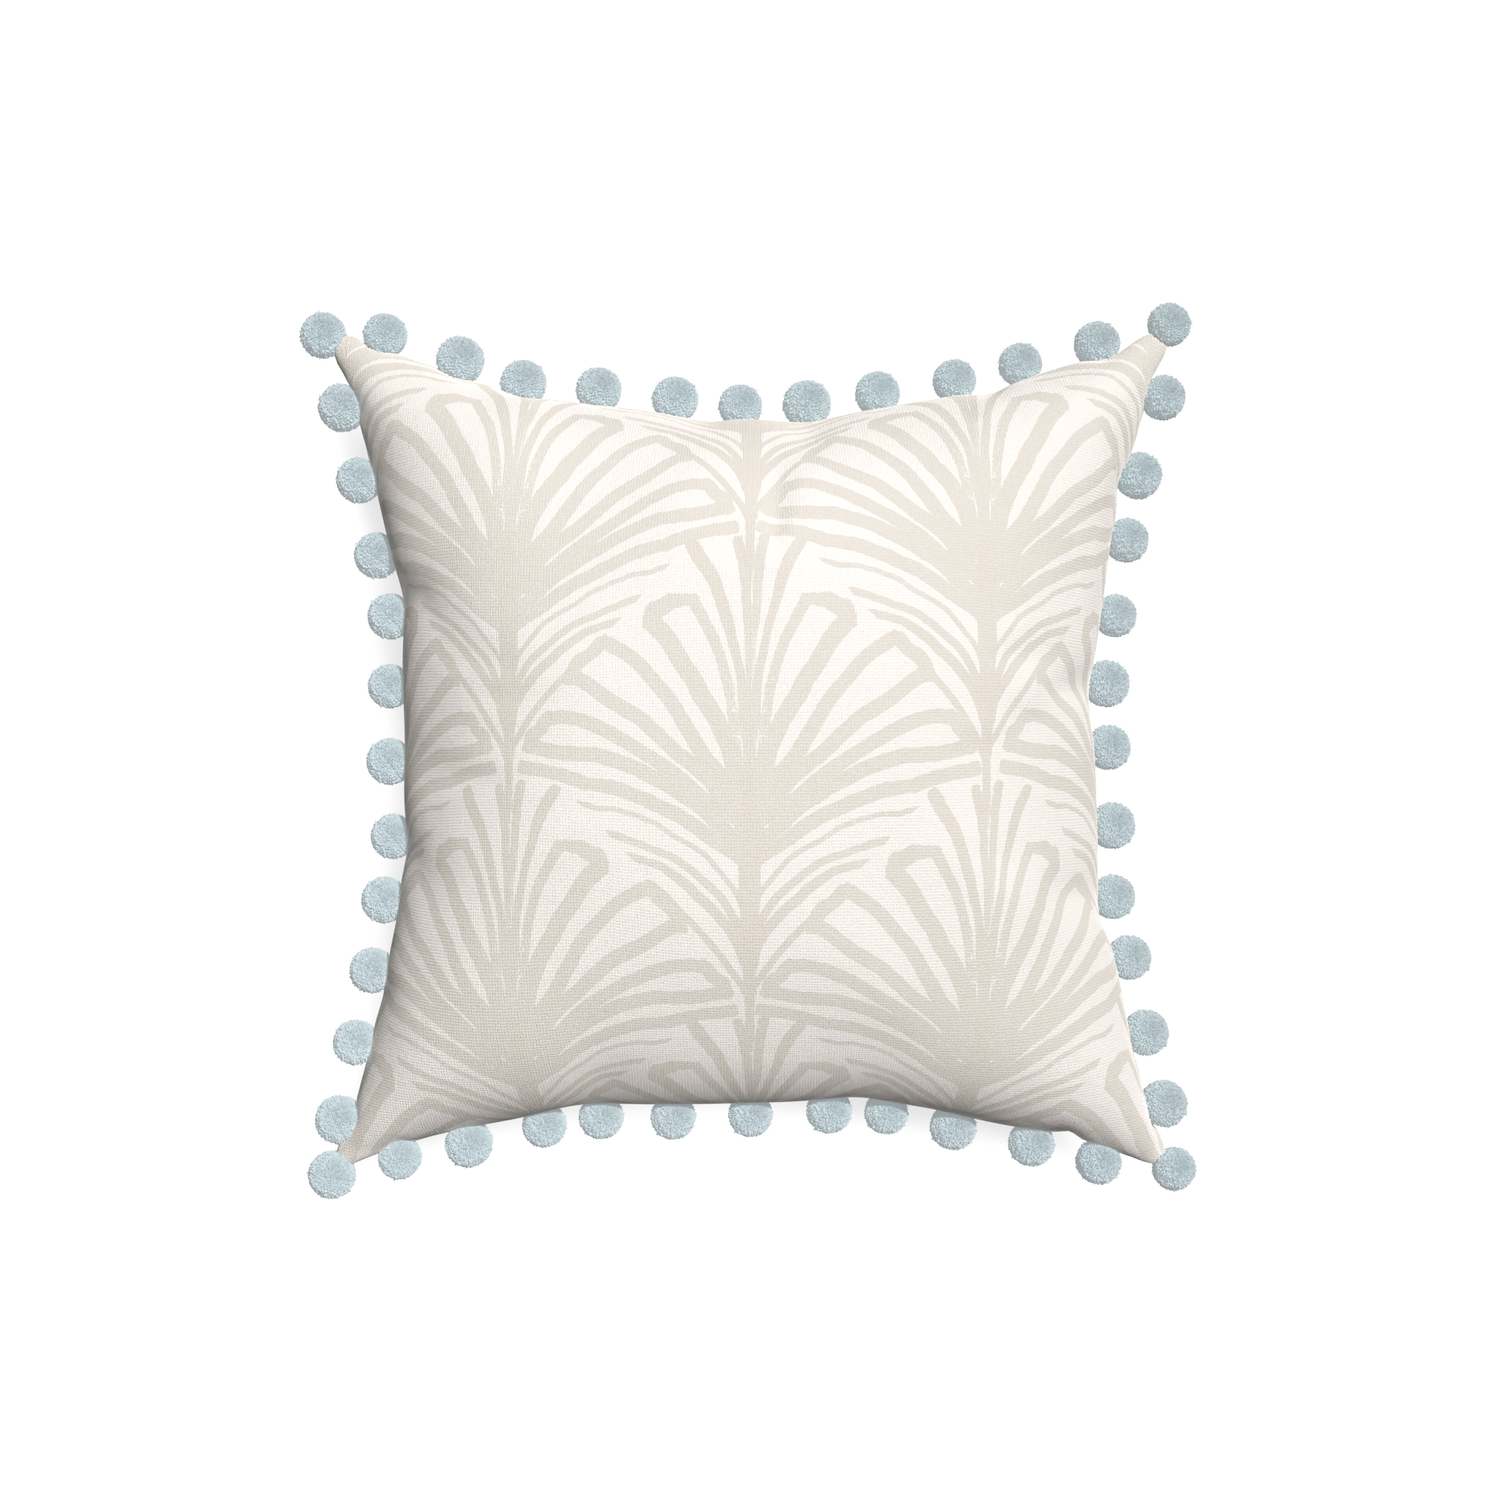 18-square suzy sand custom pillow with powder pom pom on white background